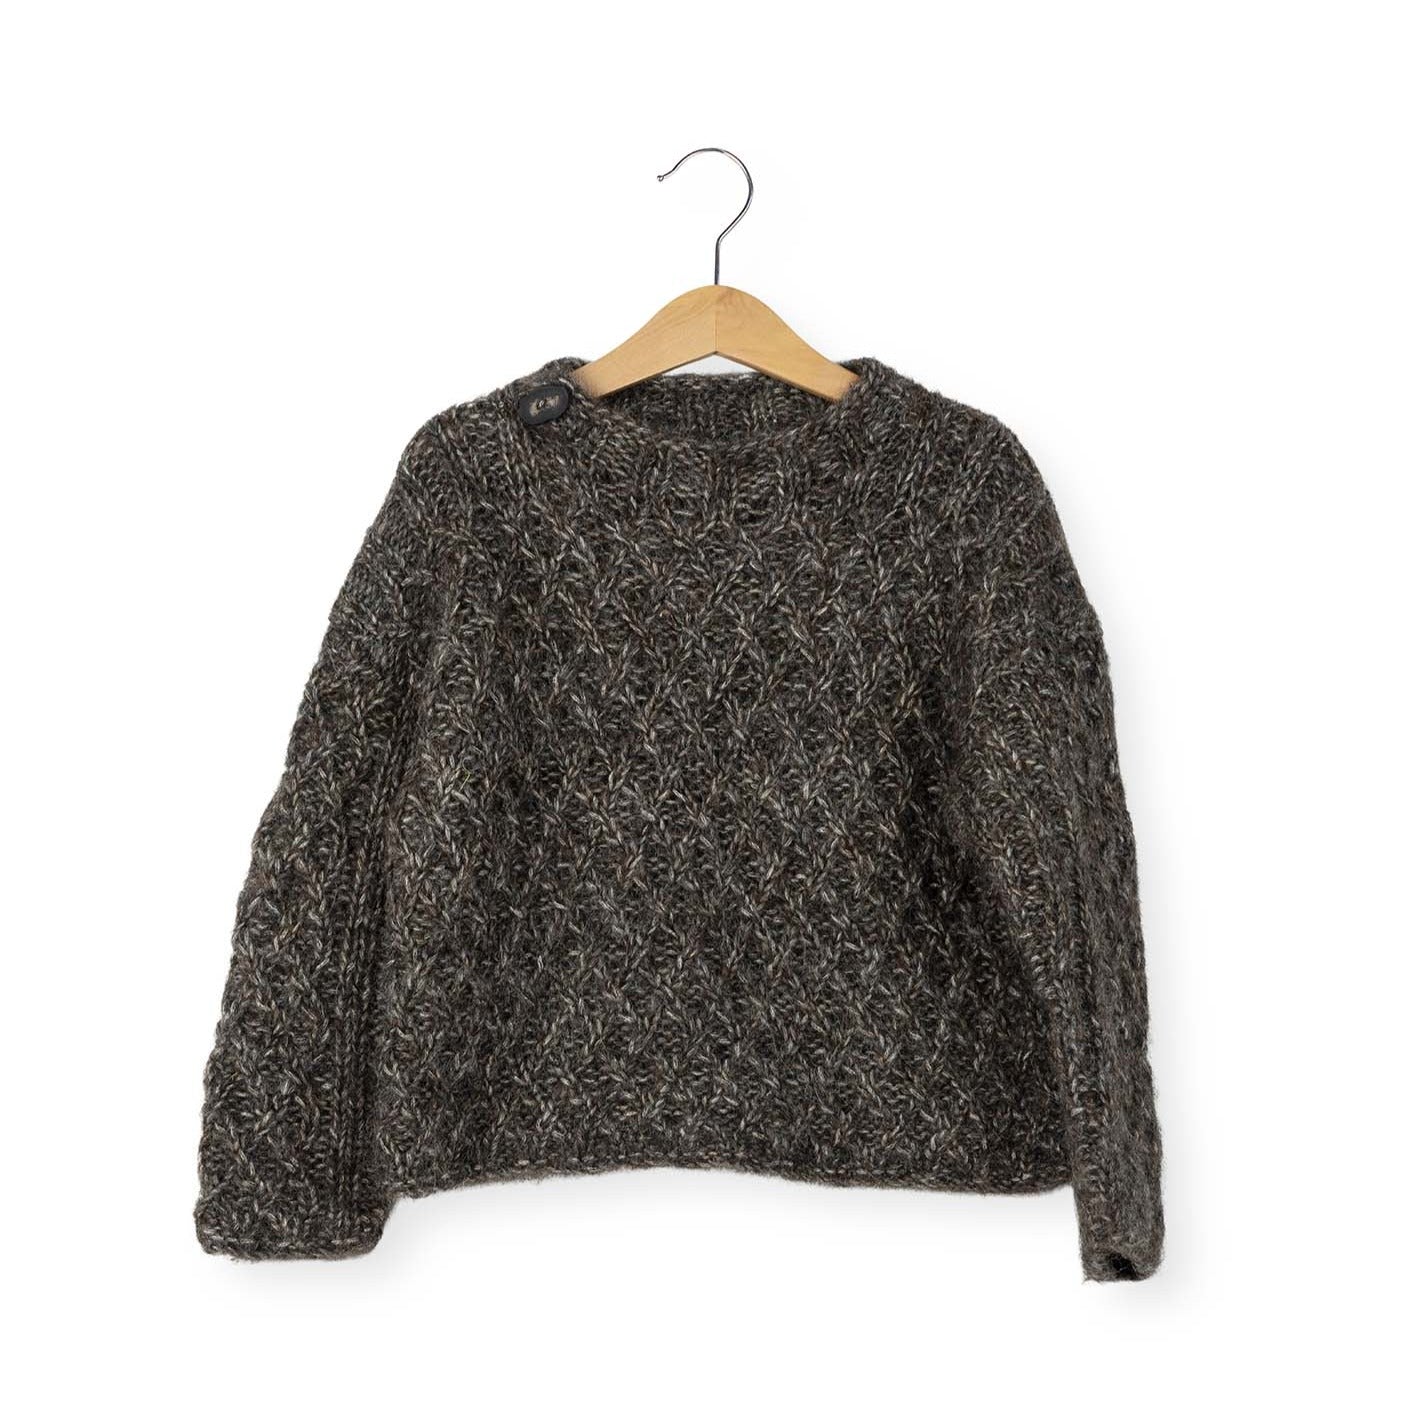 Mole Kids Sweater Pattern Isager